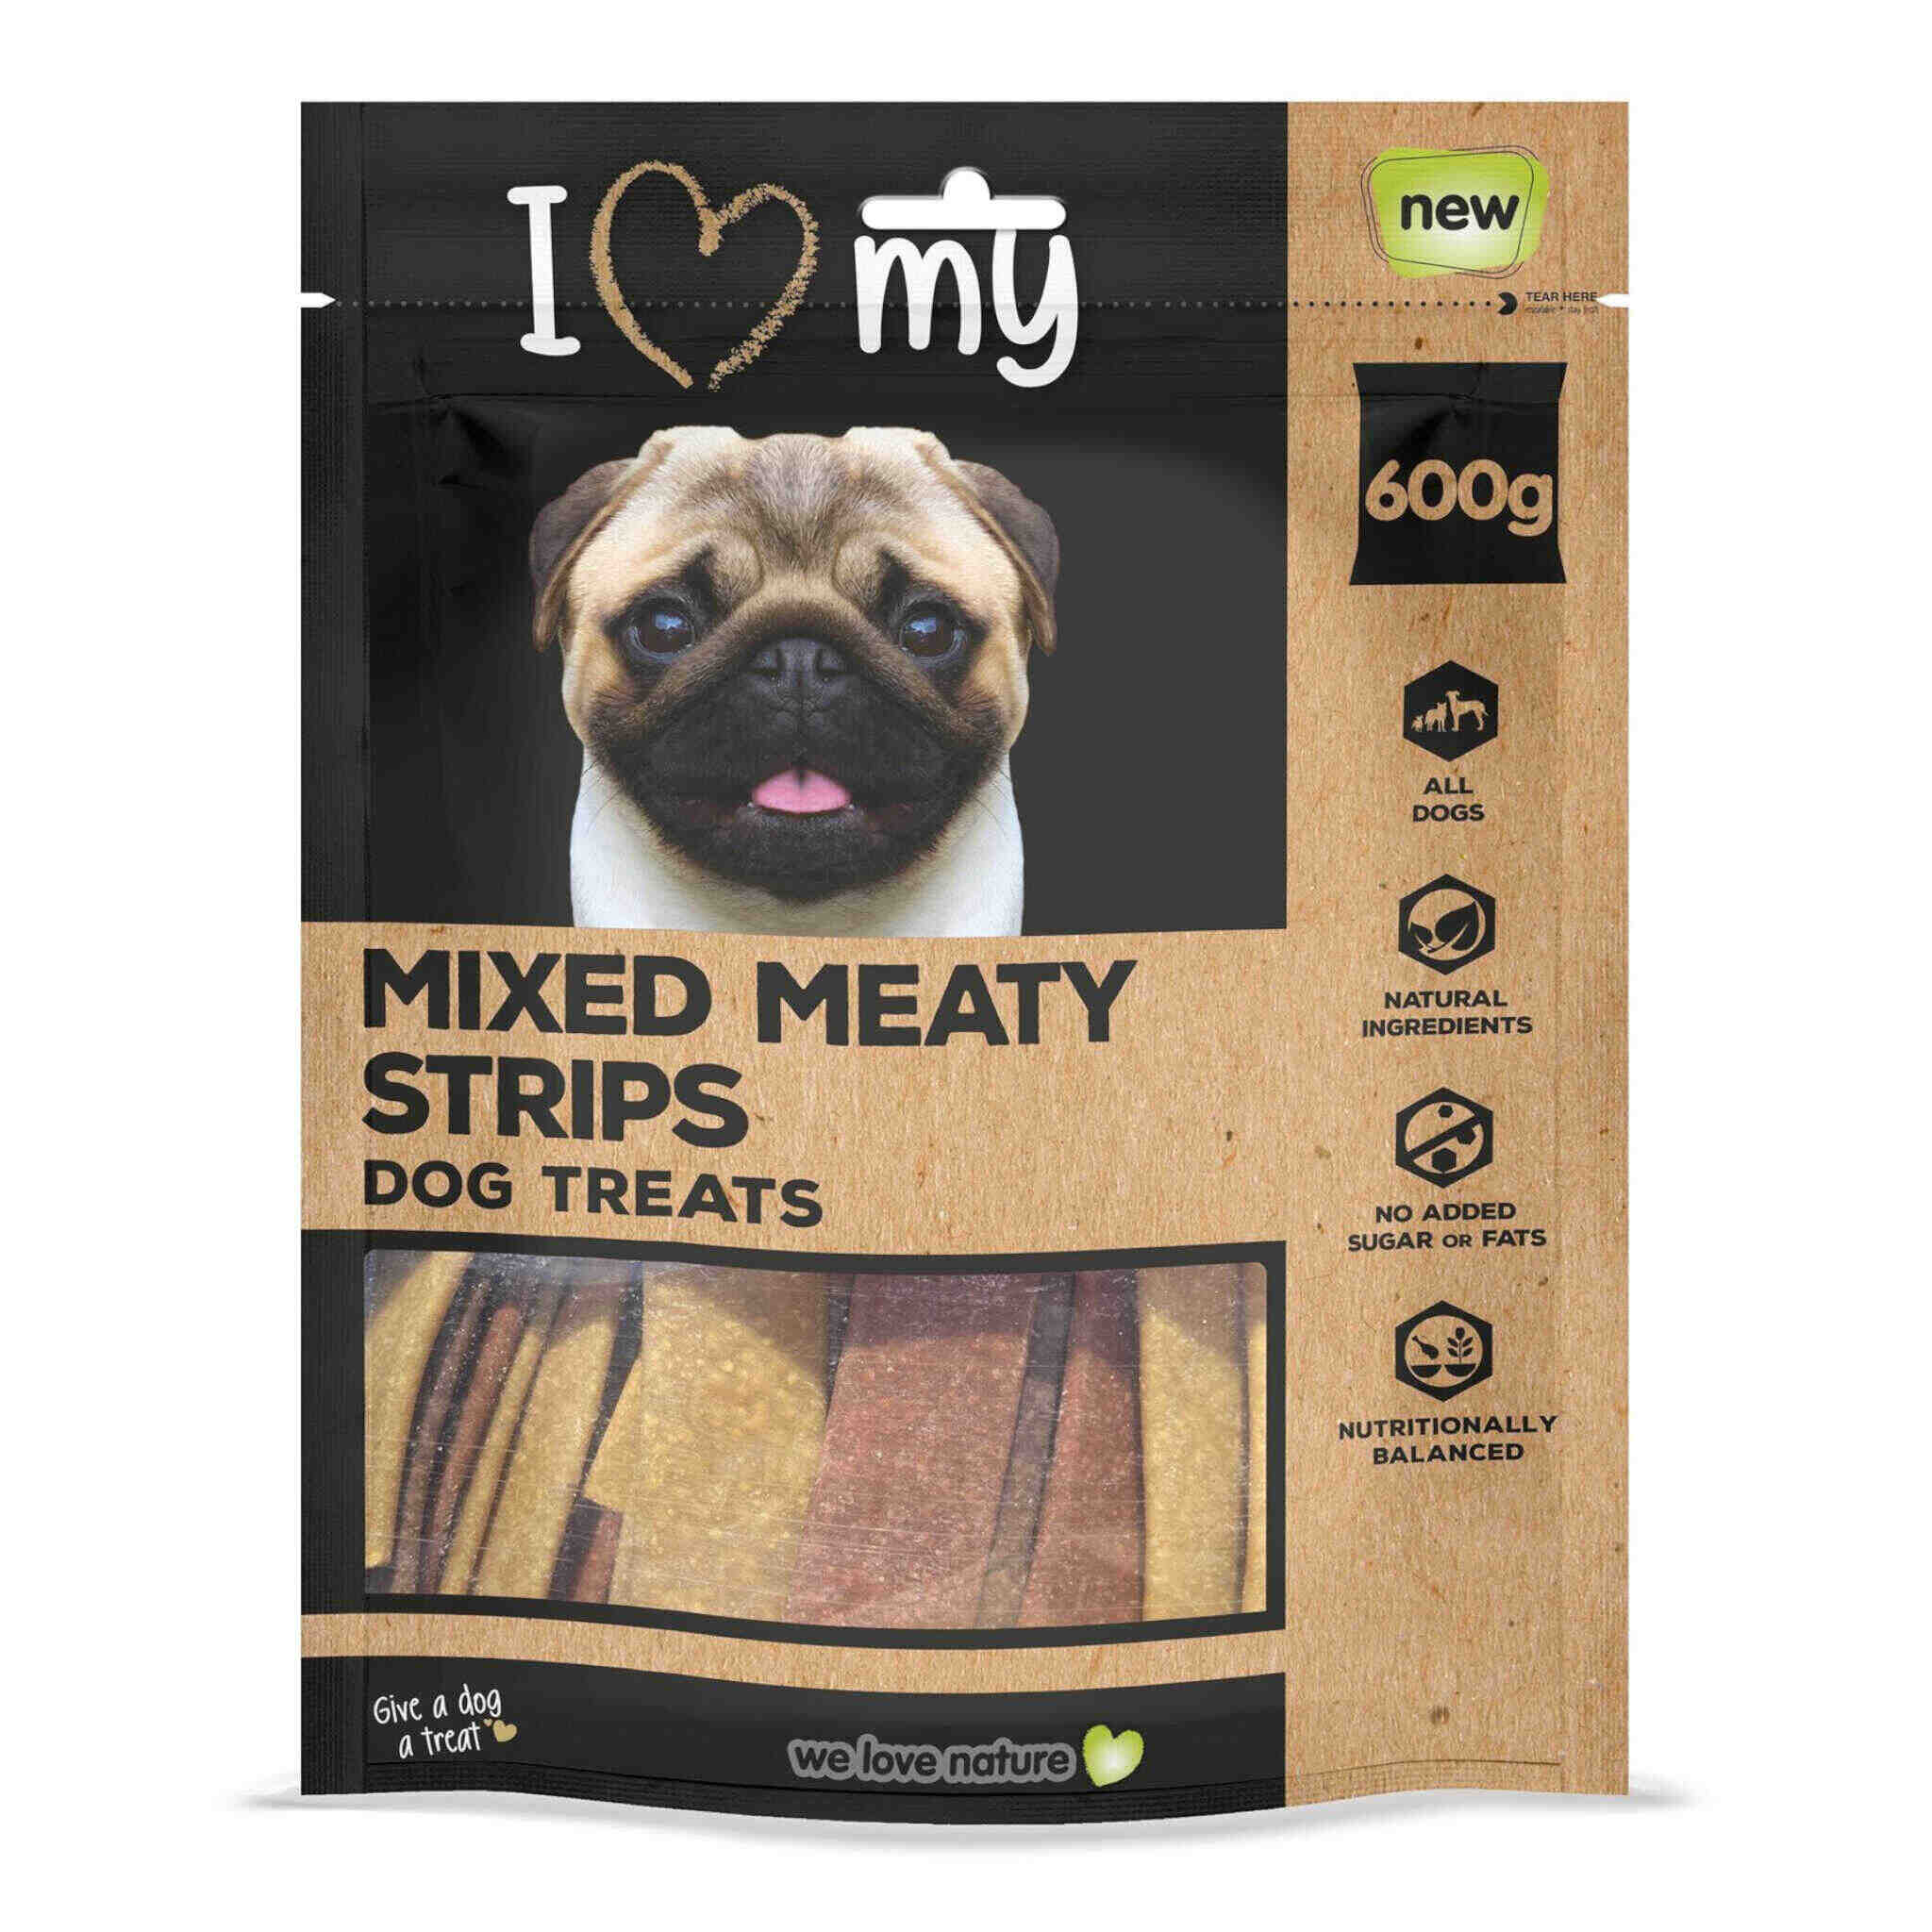 I Love My Pet Mixed Meaty Strips Dog Treats 600g RRP £2.50 CLEARANCE XL £1.99